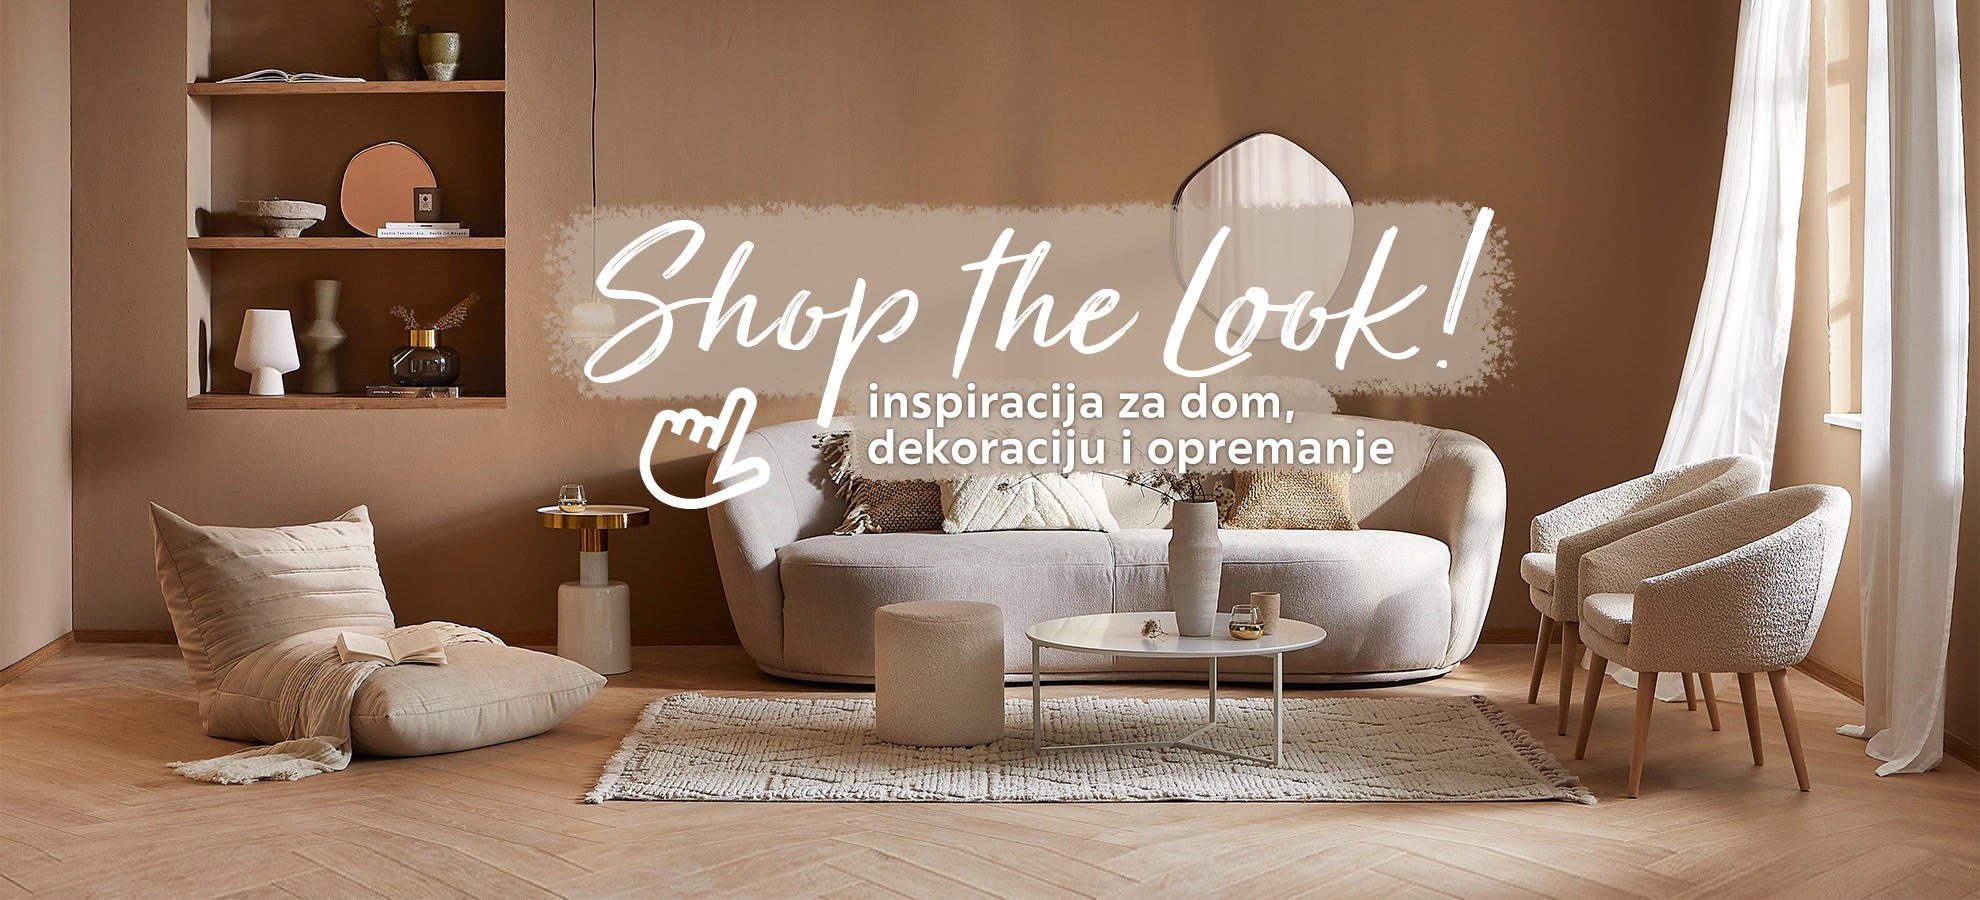 shop-the-look.jpg